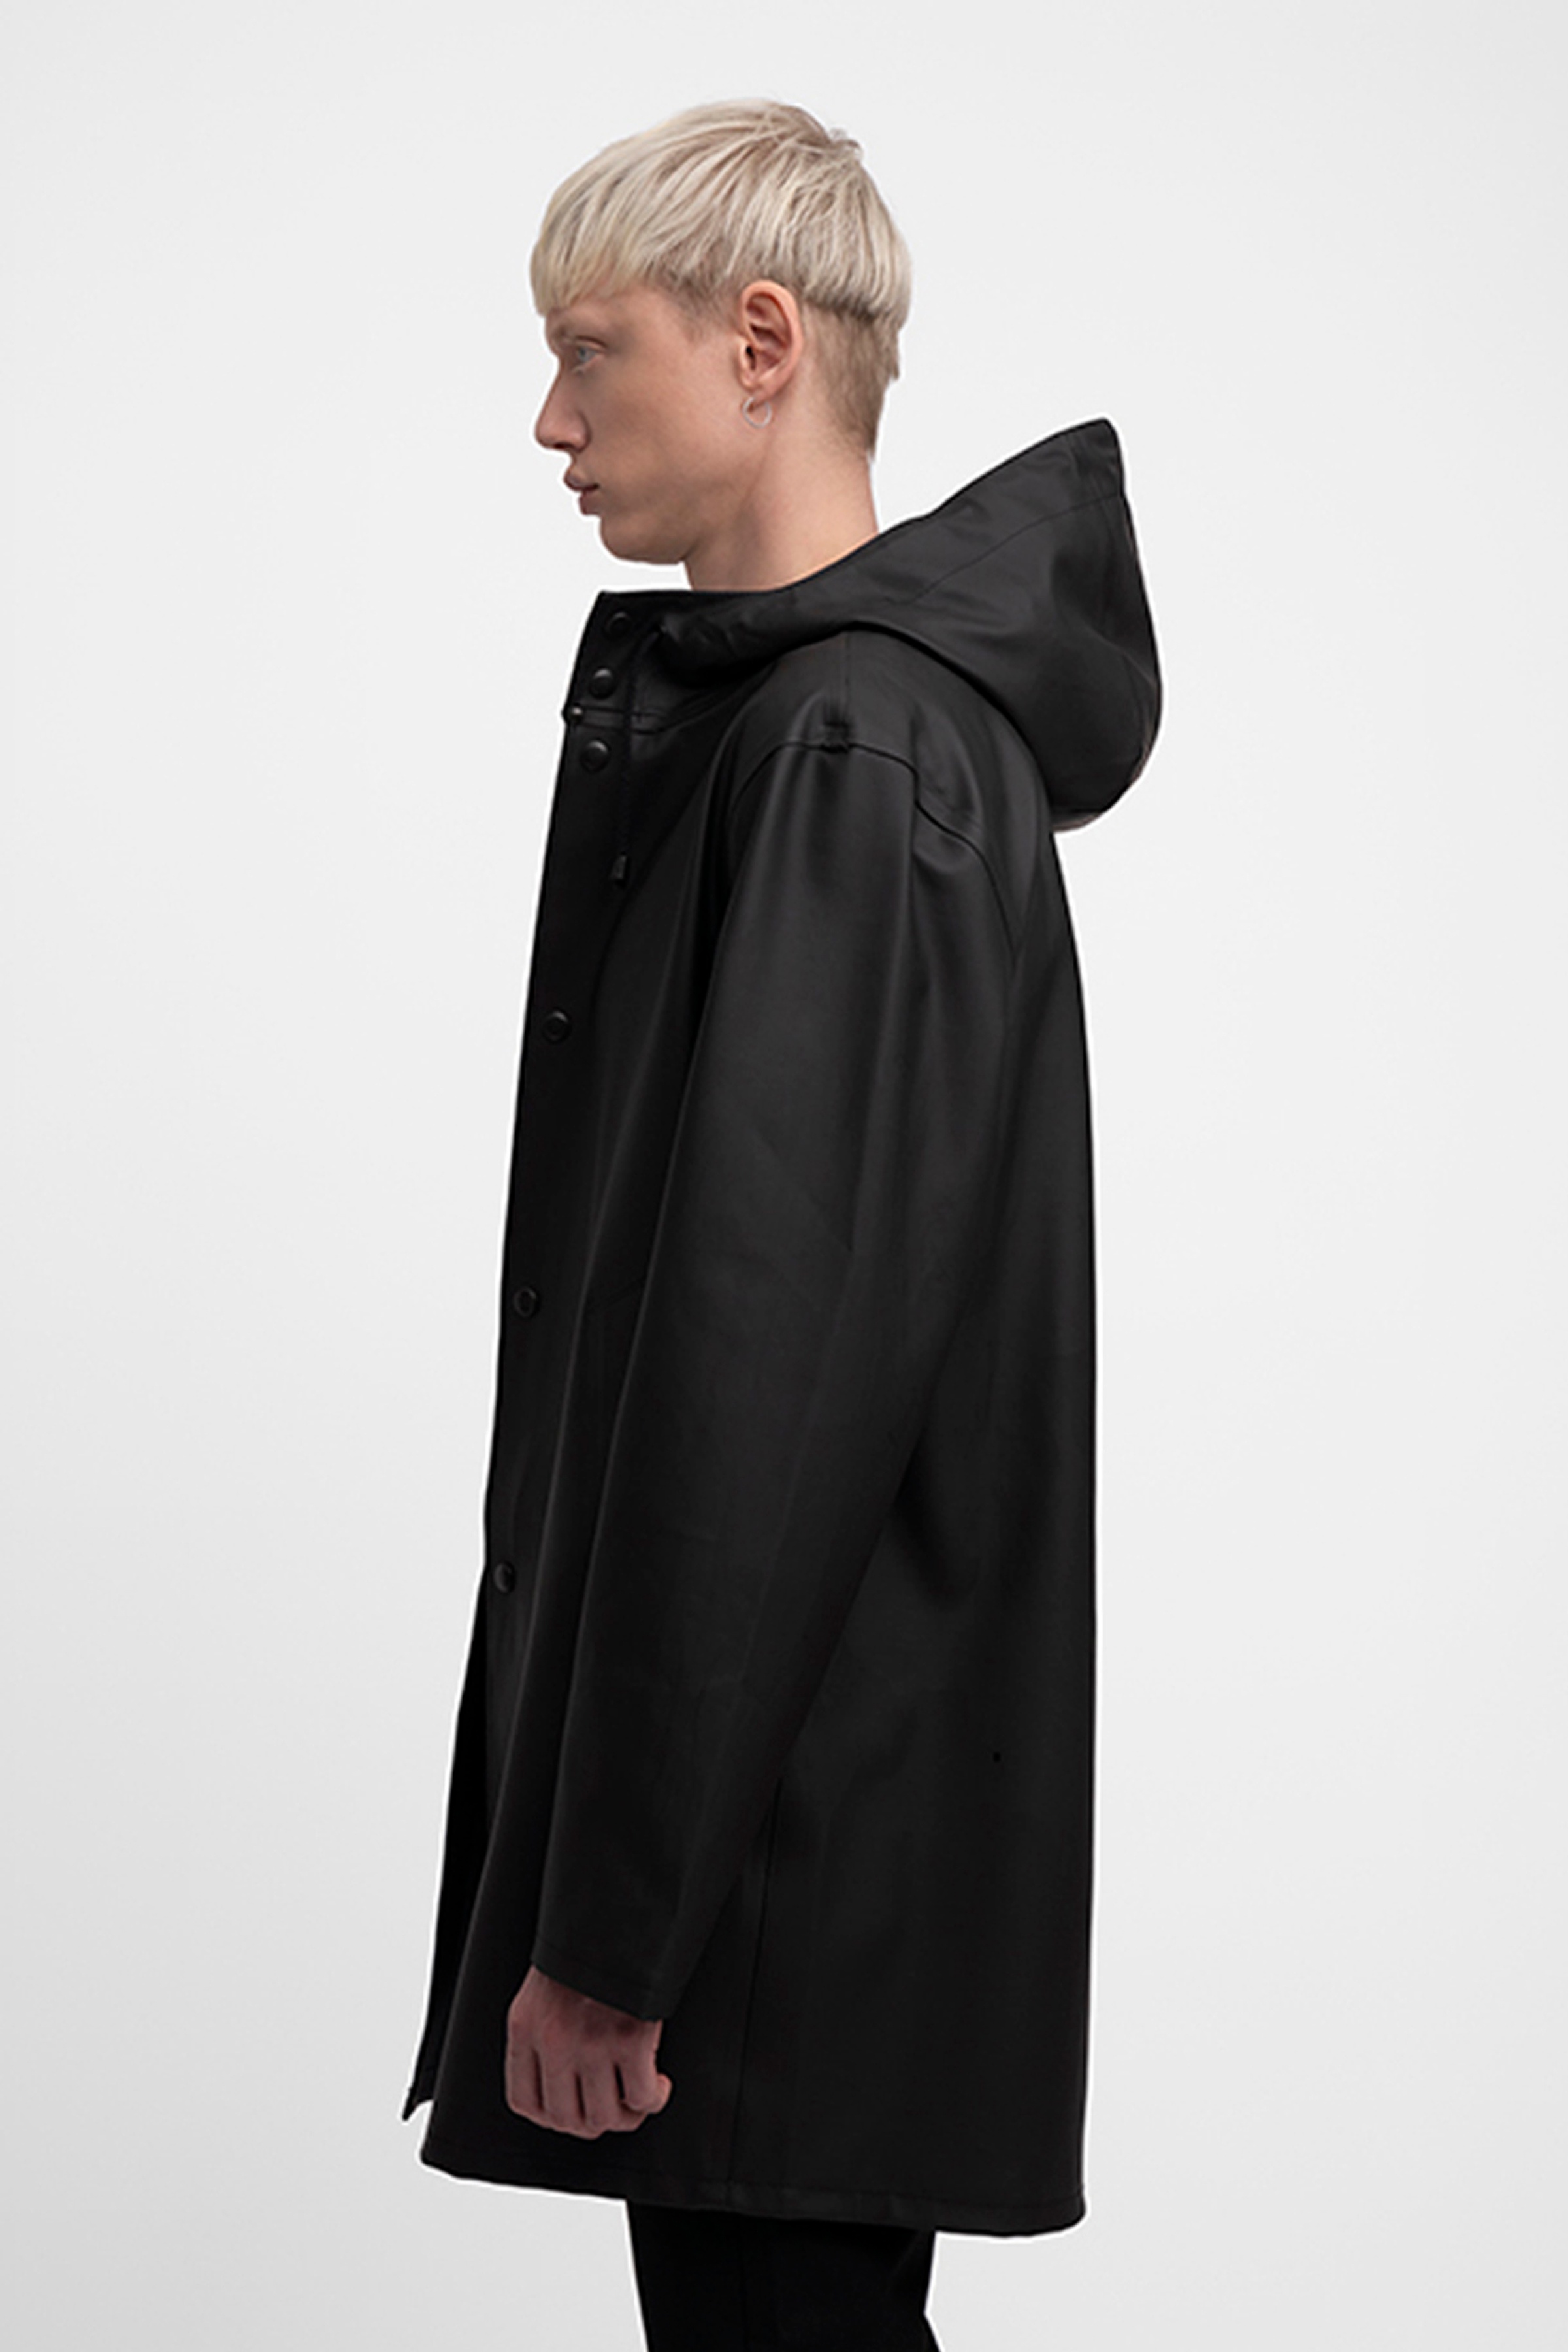 Stockholm Raincoat Black - 2